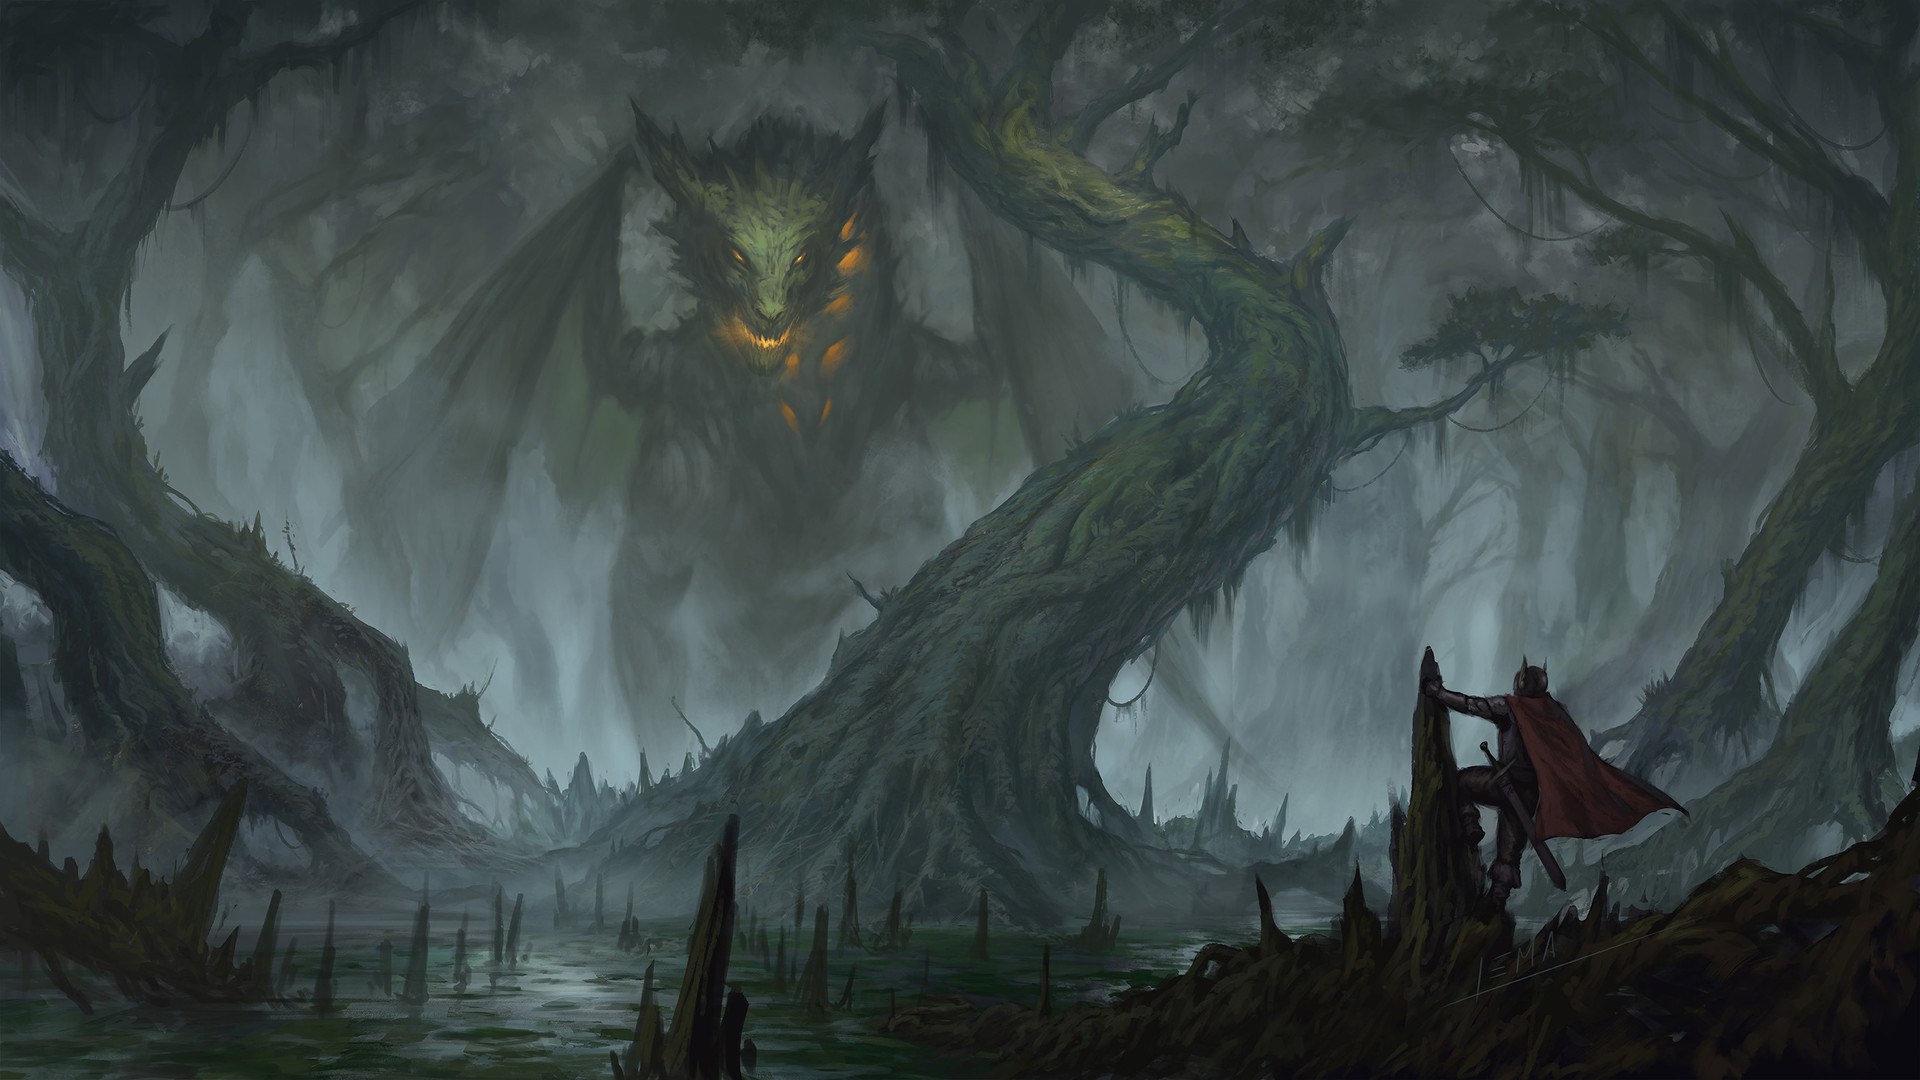 ArtStation - swamp dragon